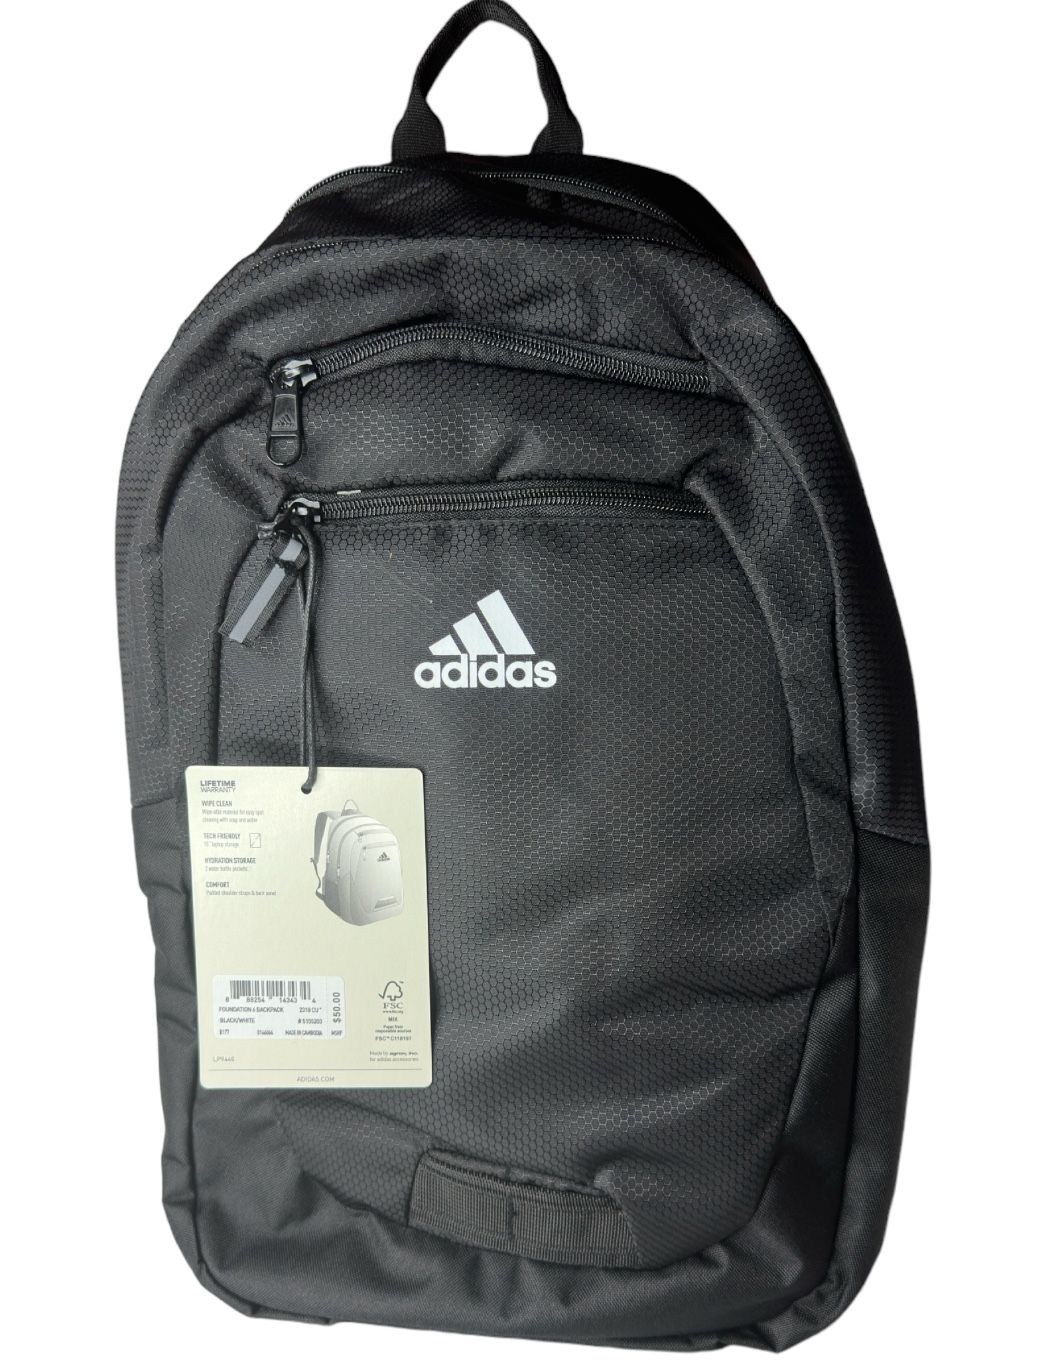 NWT Adidas Foundation 6 Backpack